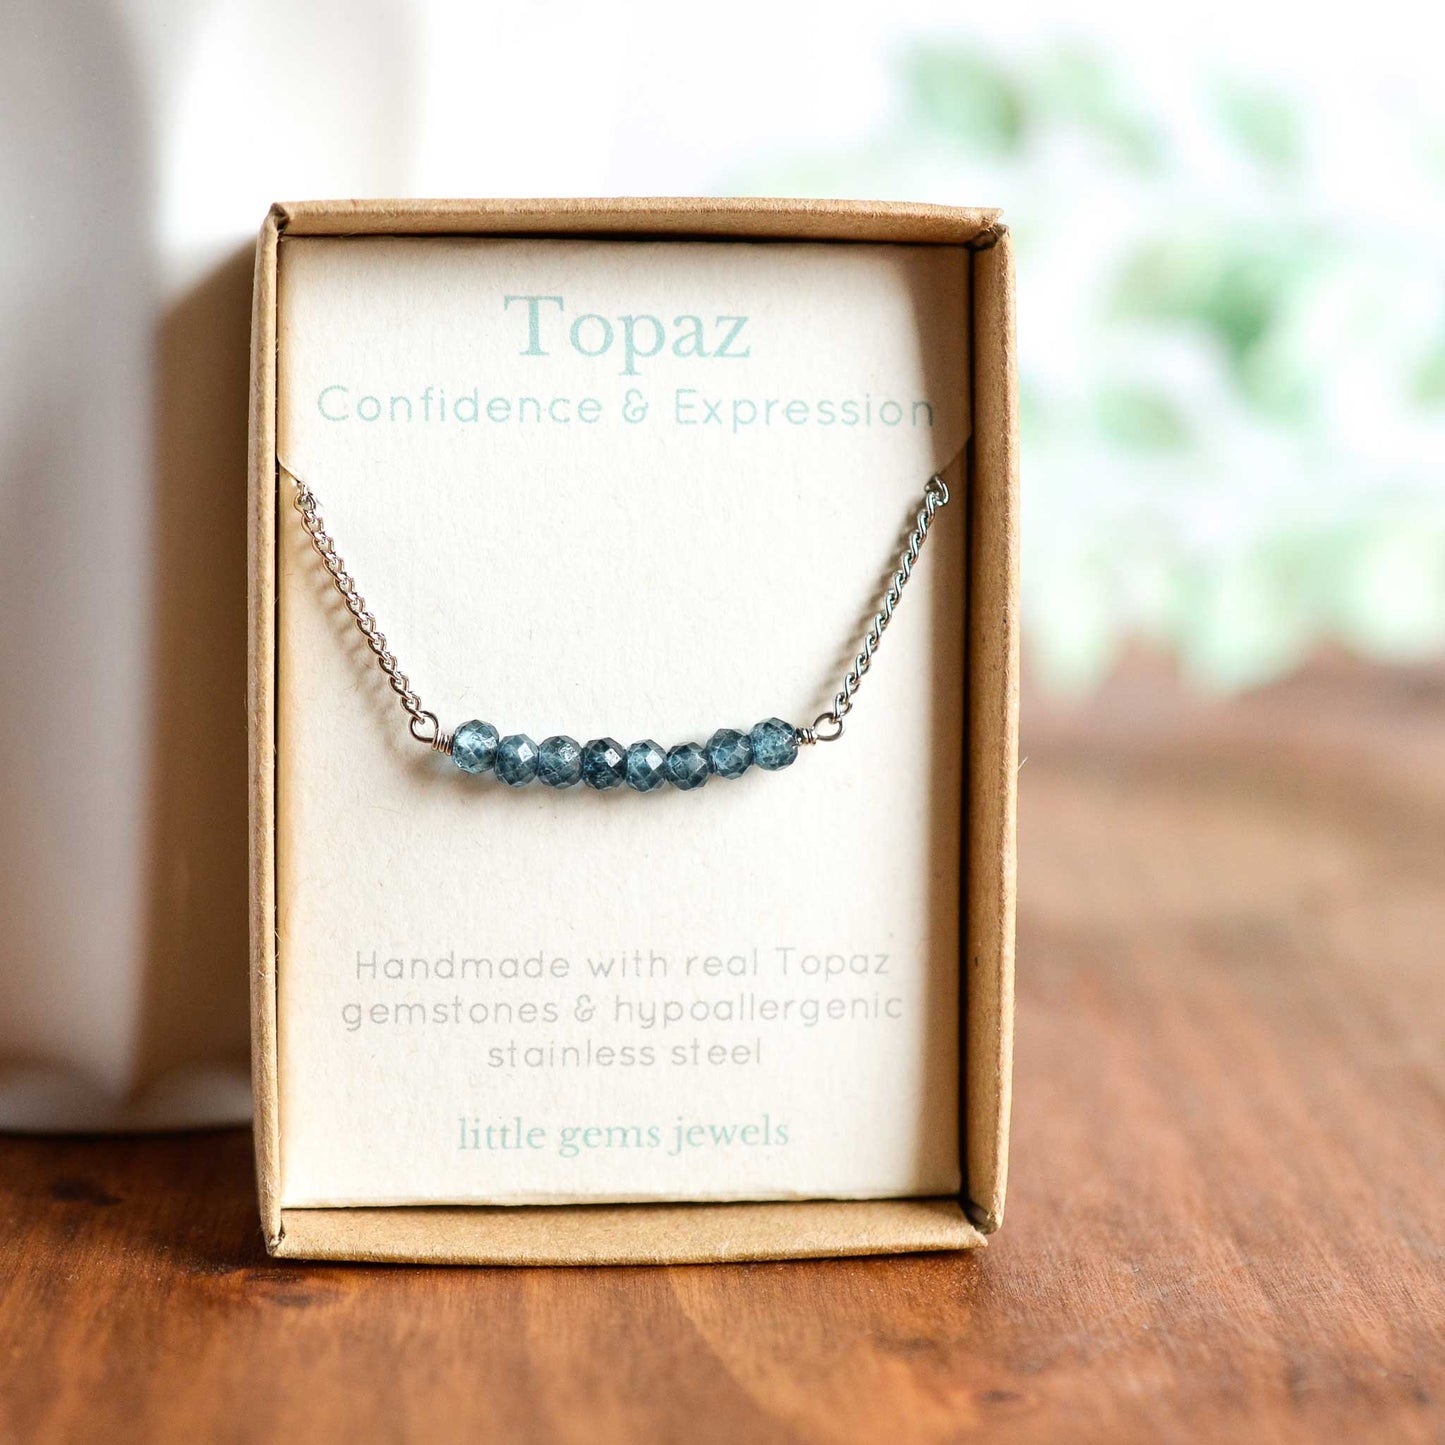 Dainty blue Topaz gemstone necklace in gift box